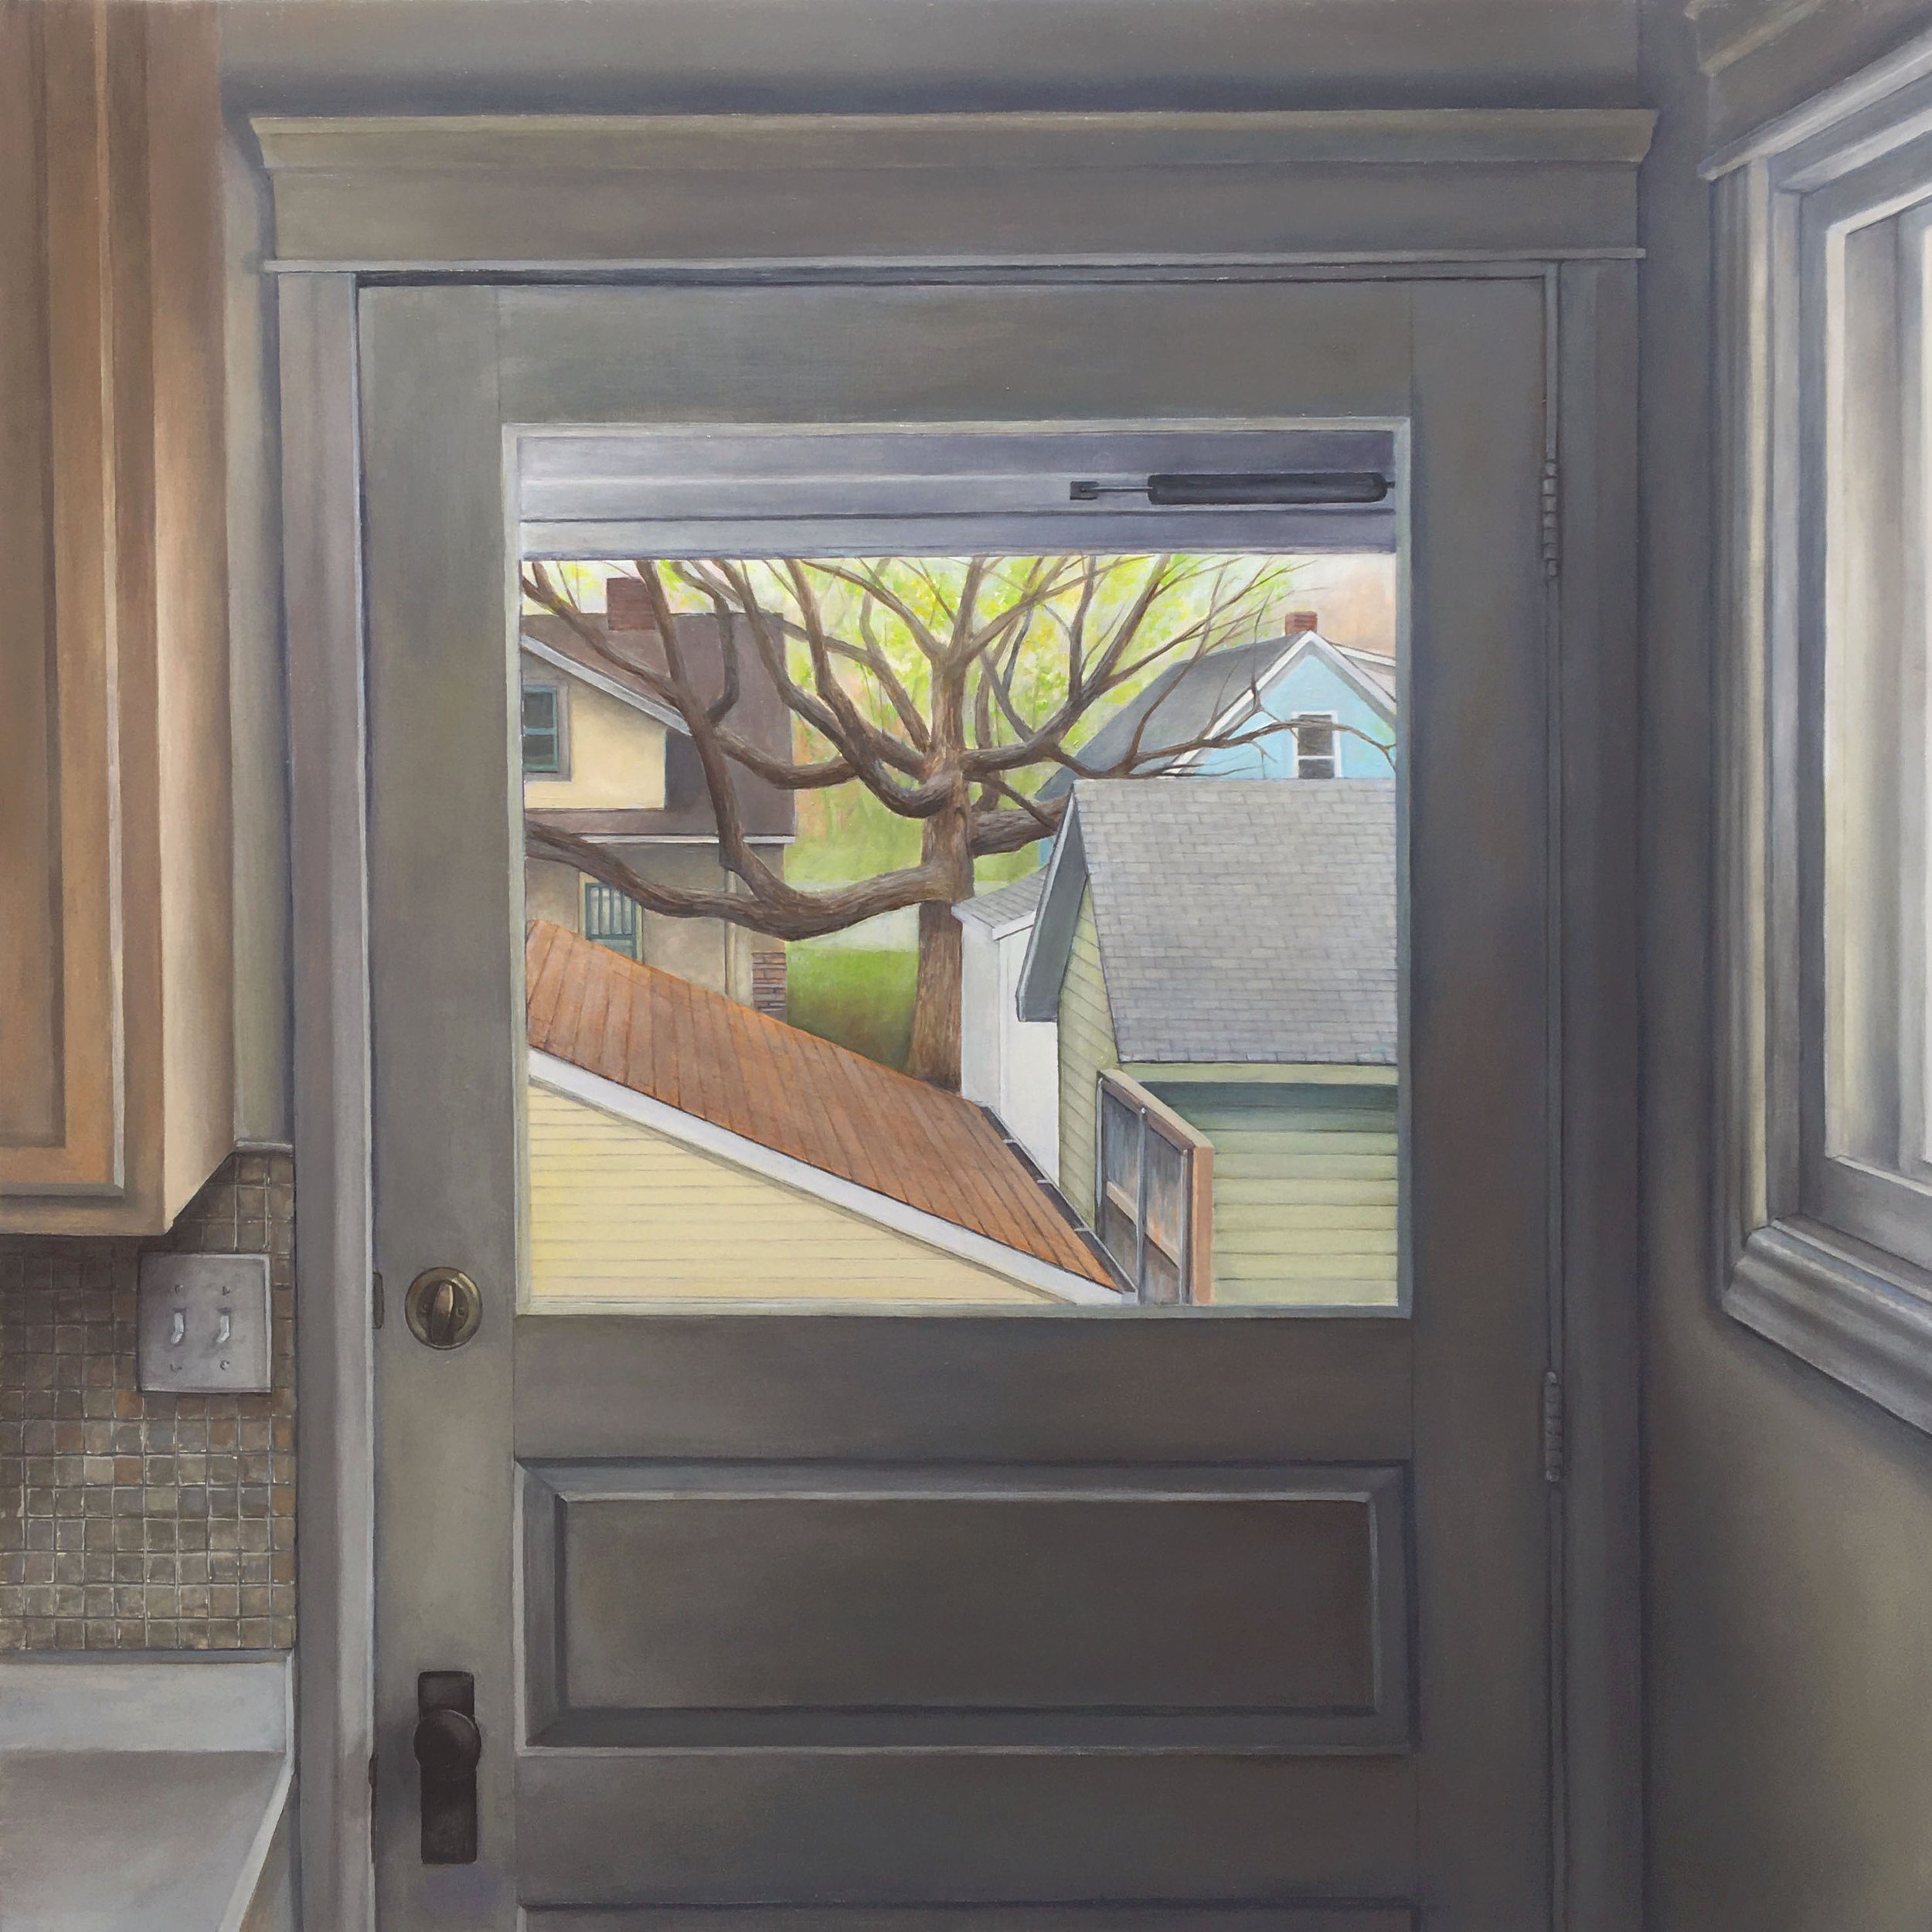   Kitchen Door Window   2022  Oil on panel  24 x 24 inches   